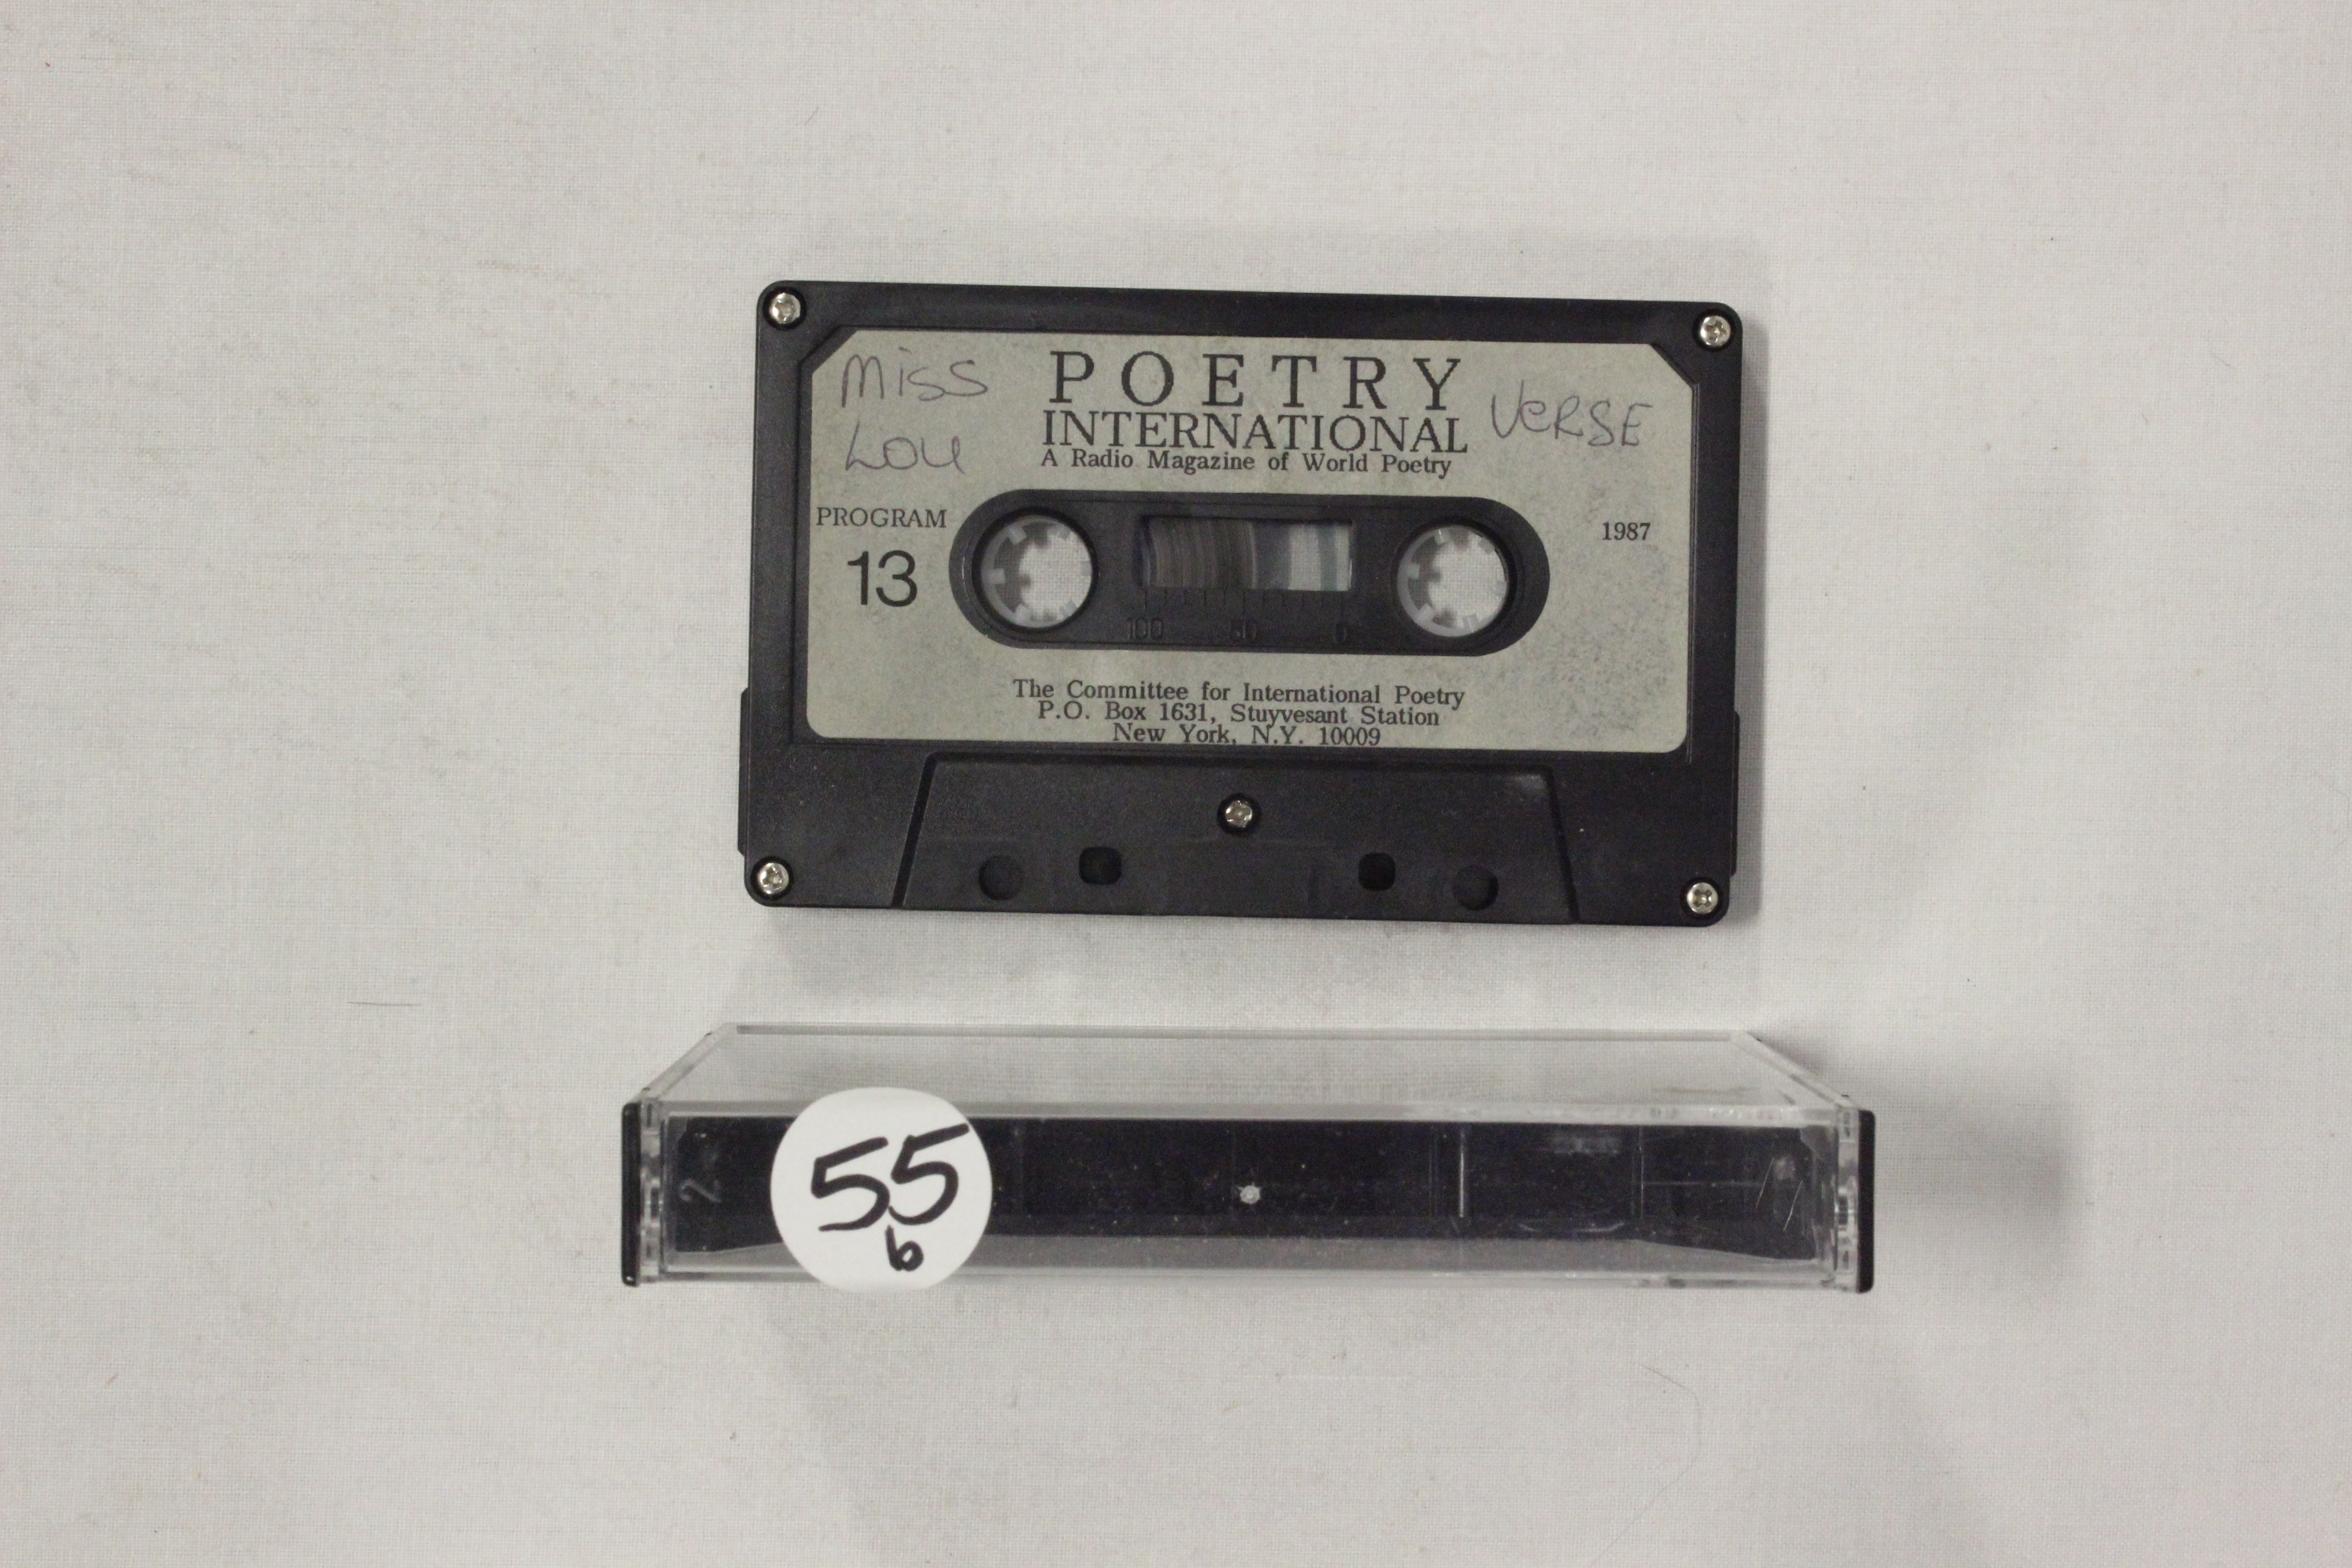  Verse on Poetry International: A Radio Magazine of World Poetry, program 13